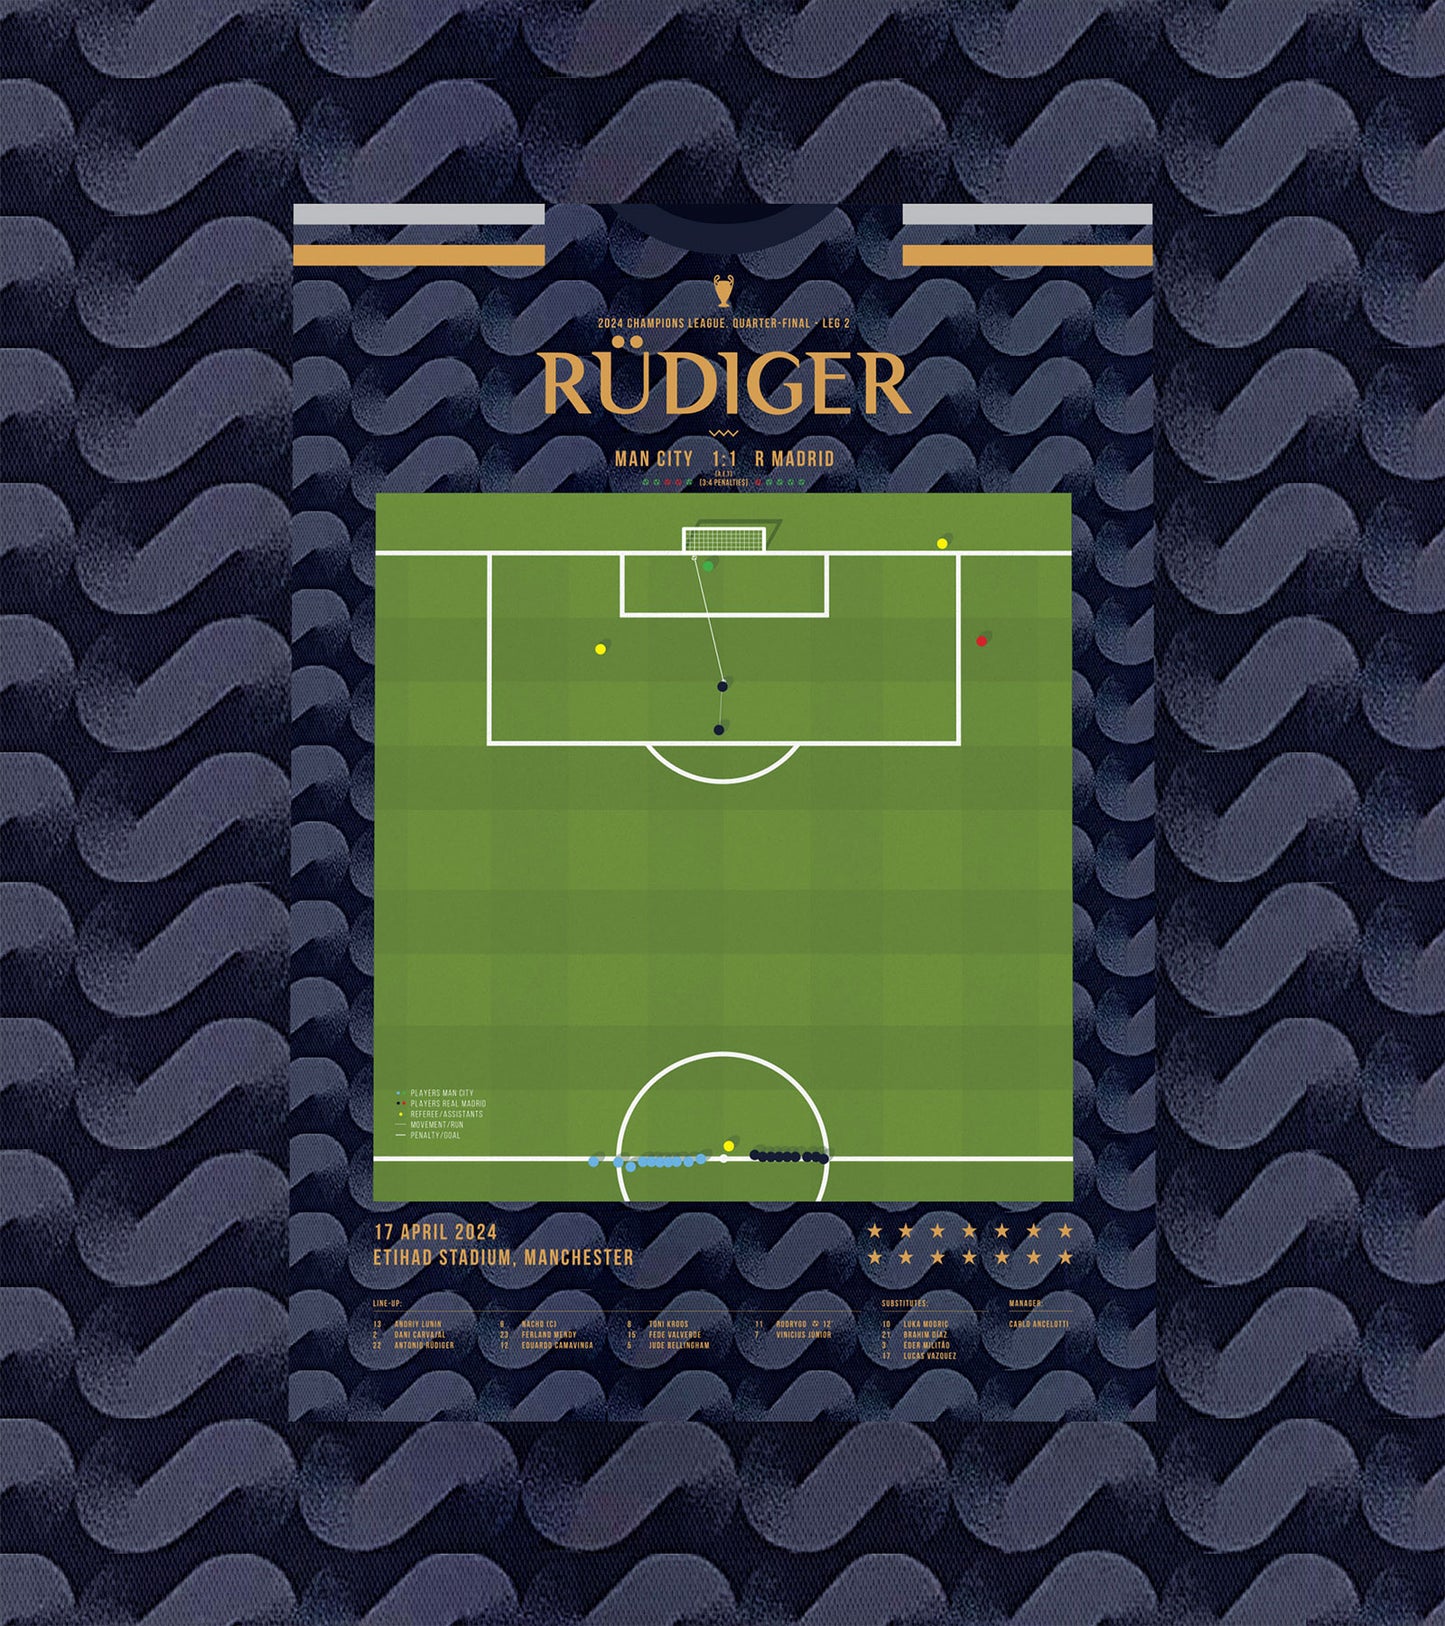 Rüdiger scores the winning penalty to beat Man City